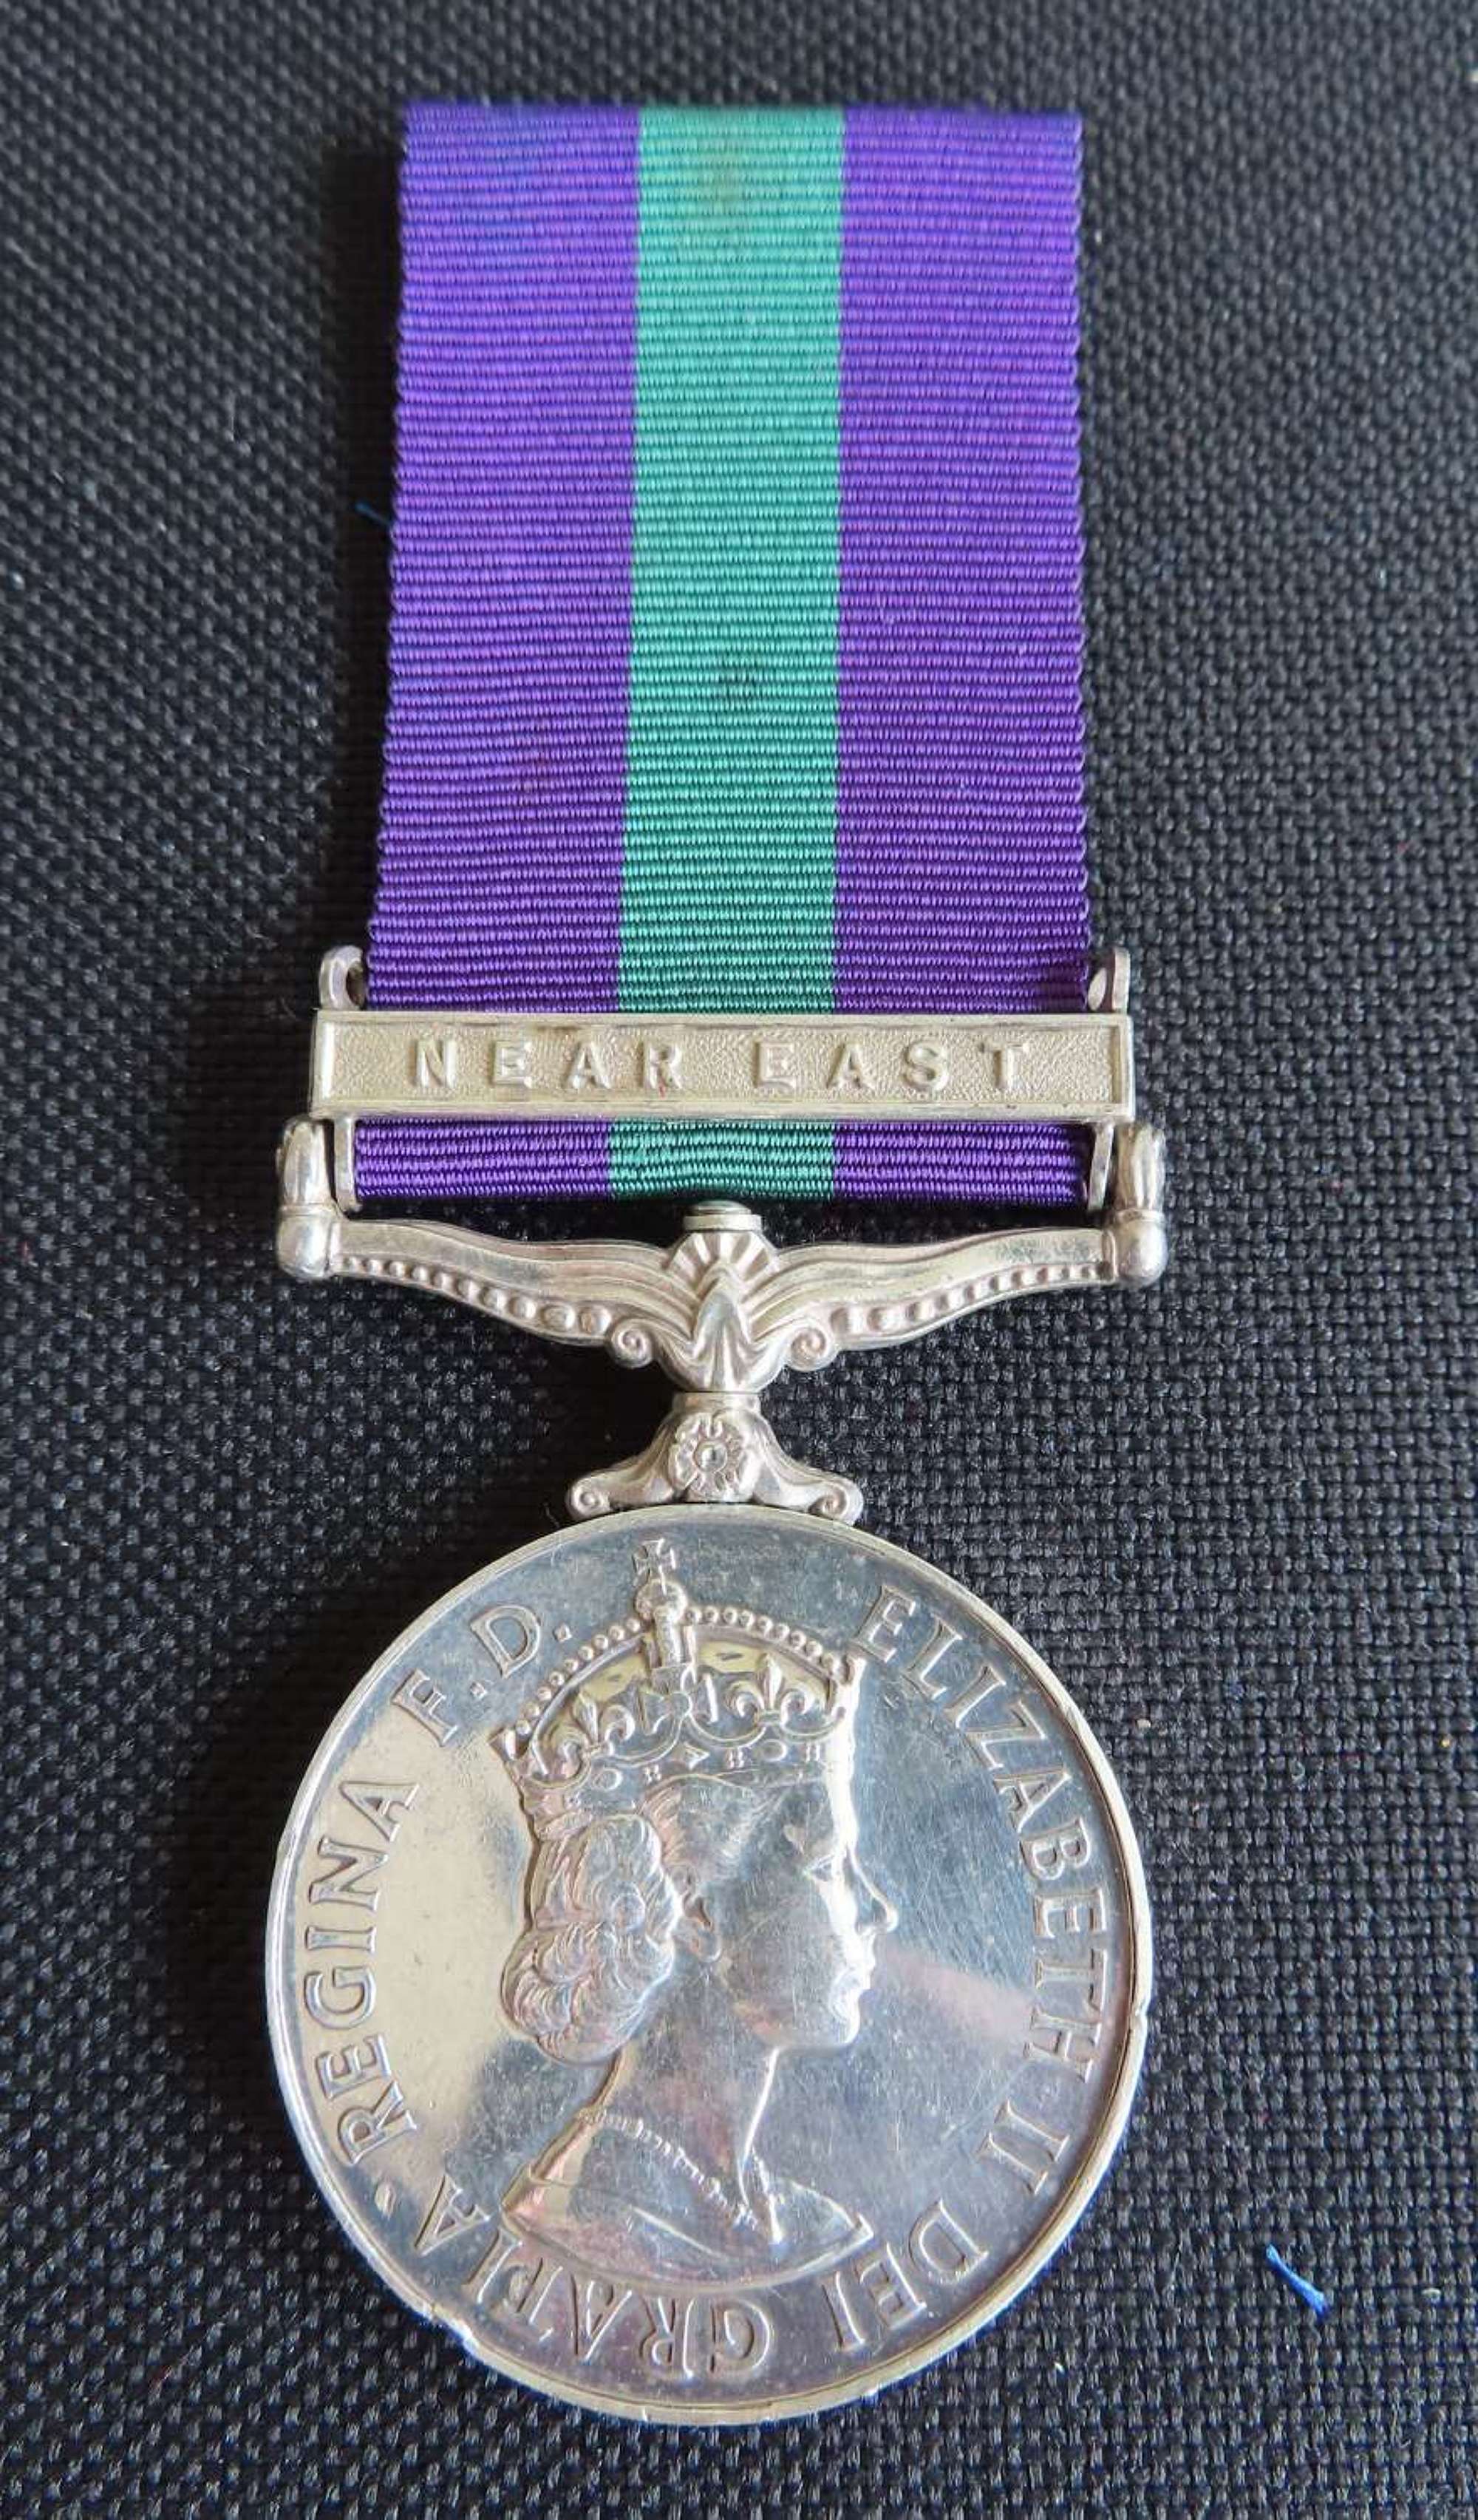 Near East general service medal awarded to Spr Gibbins R.E.